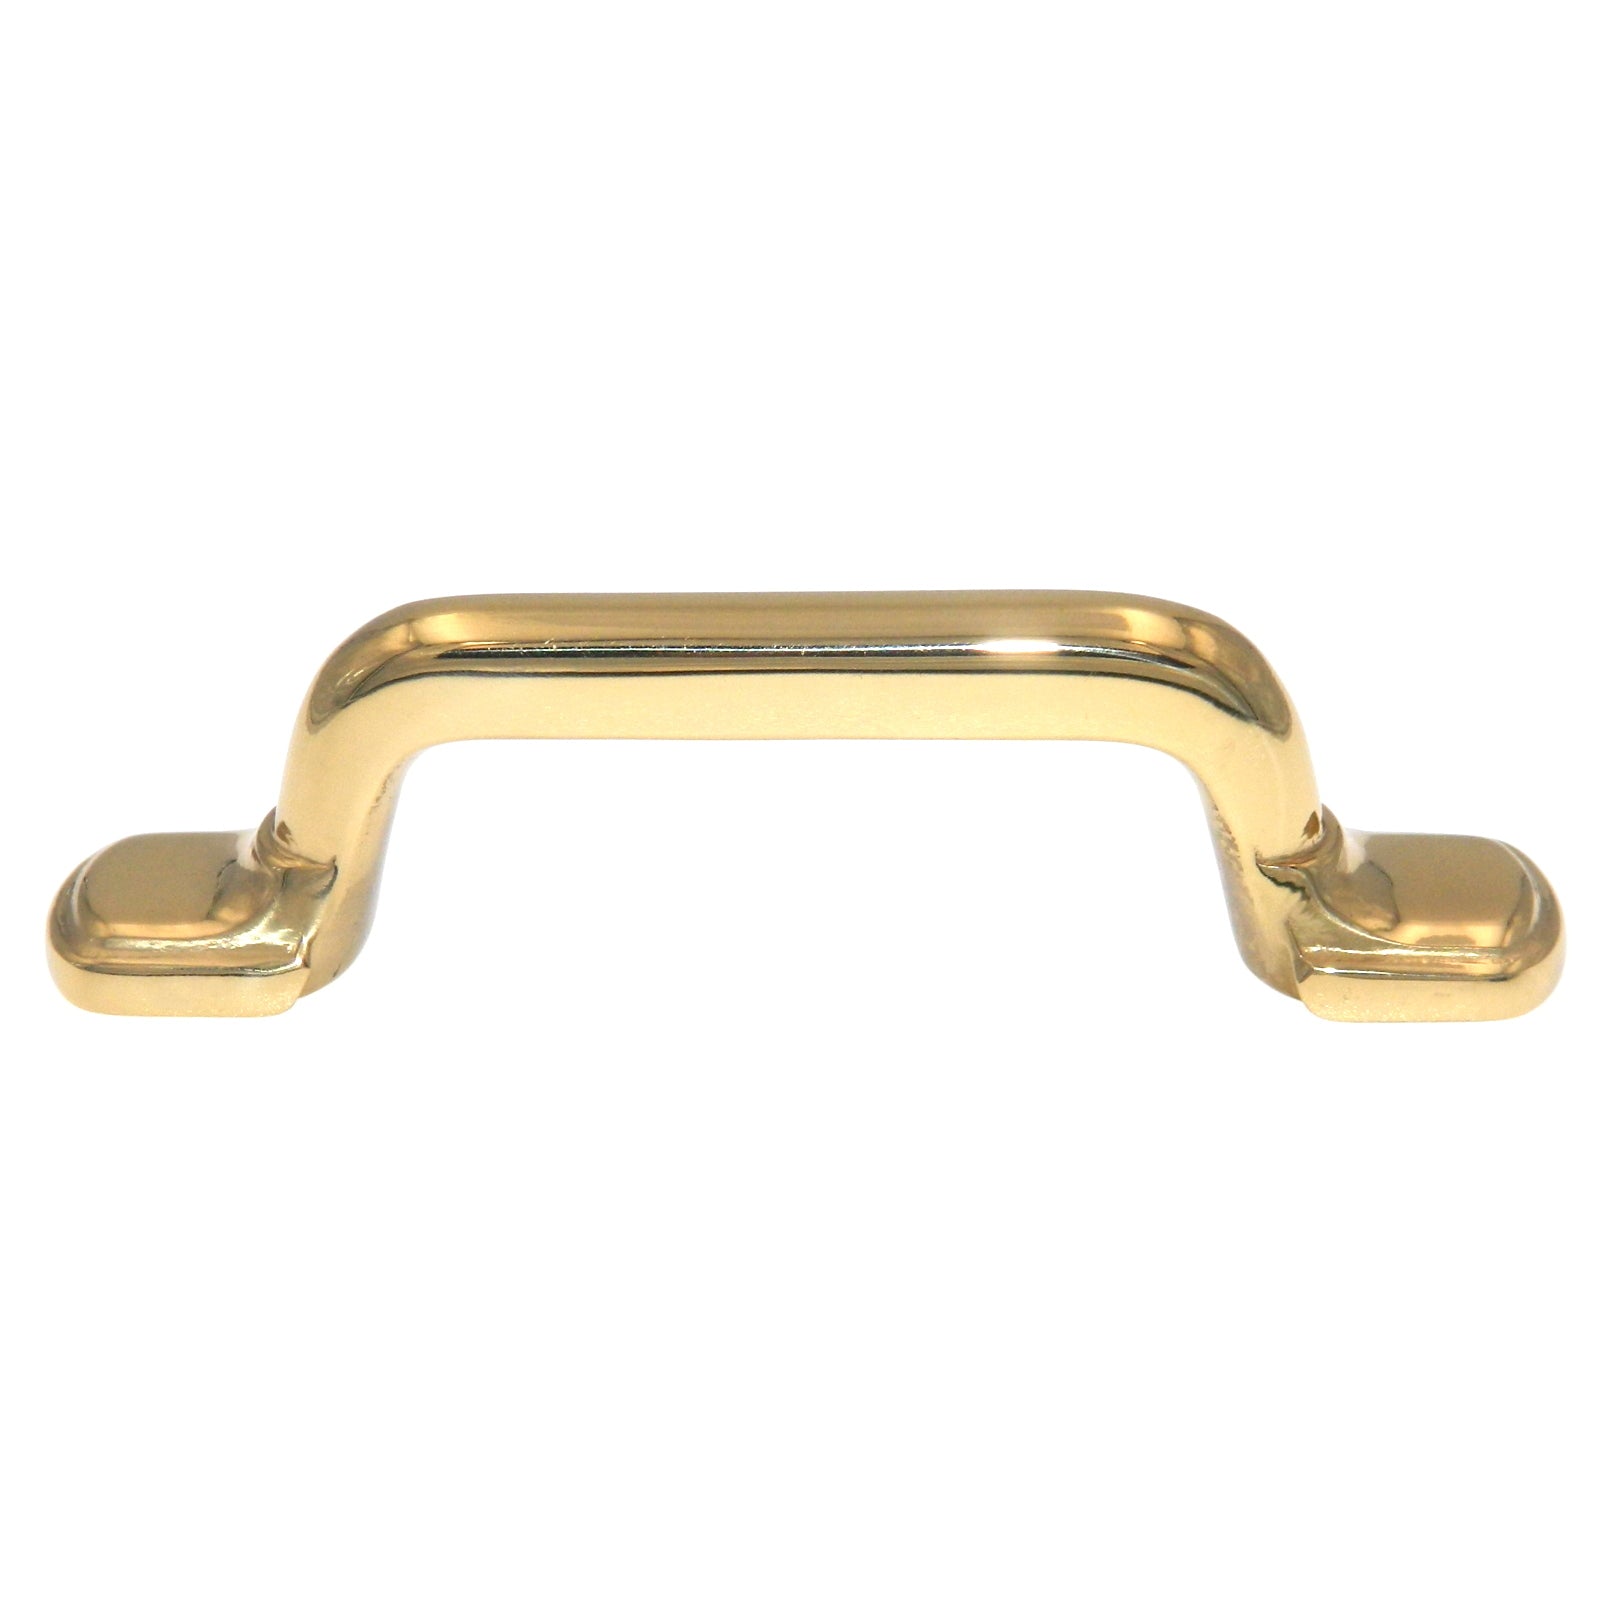 Keeler Solid Brass Polished Brass 3"cc Furniture Cabinet Handle Pull Solid Brass K5